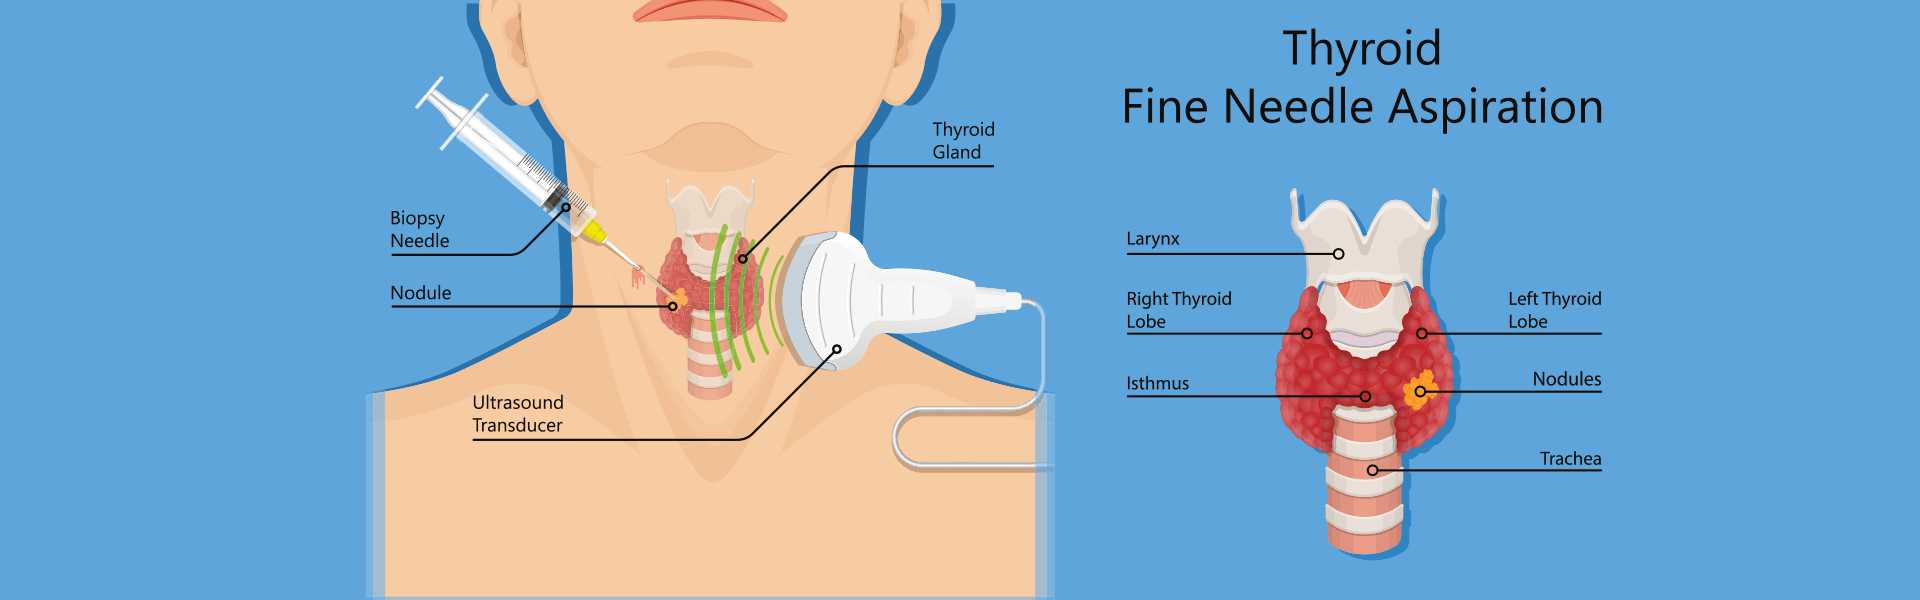 FNAC Treatment Procedure in Pune